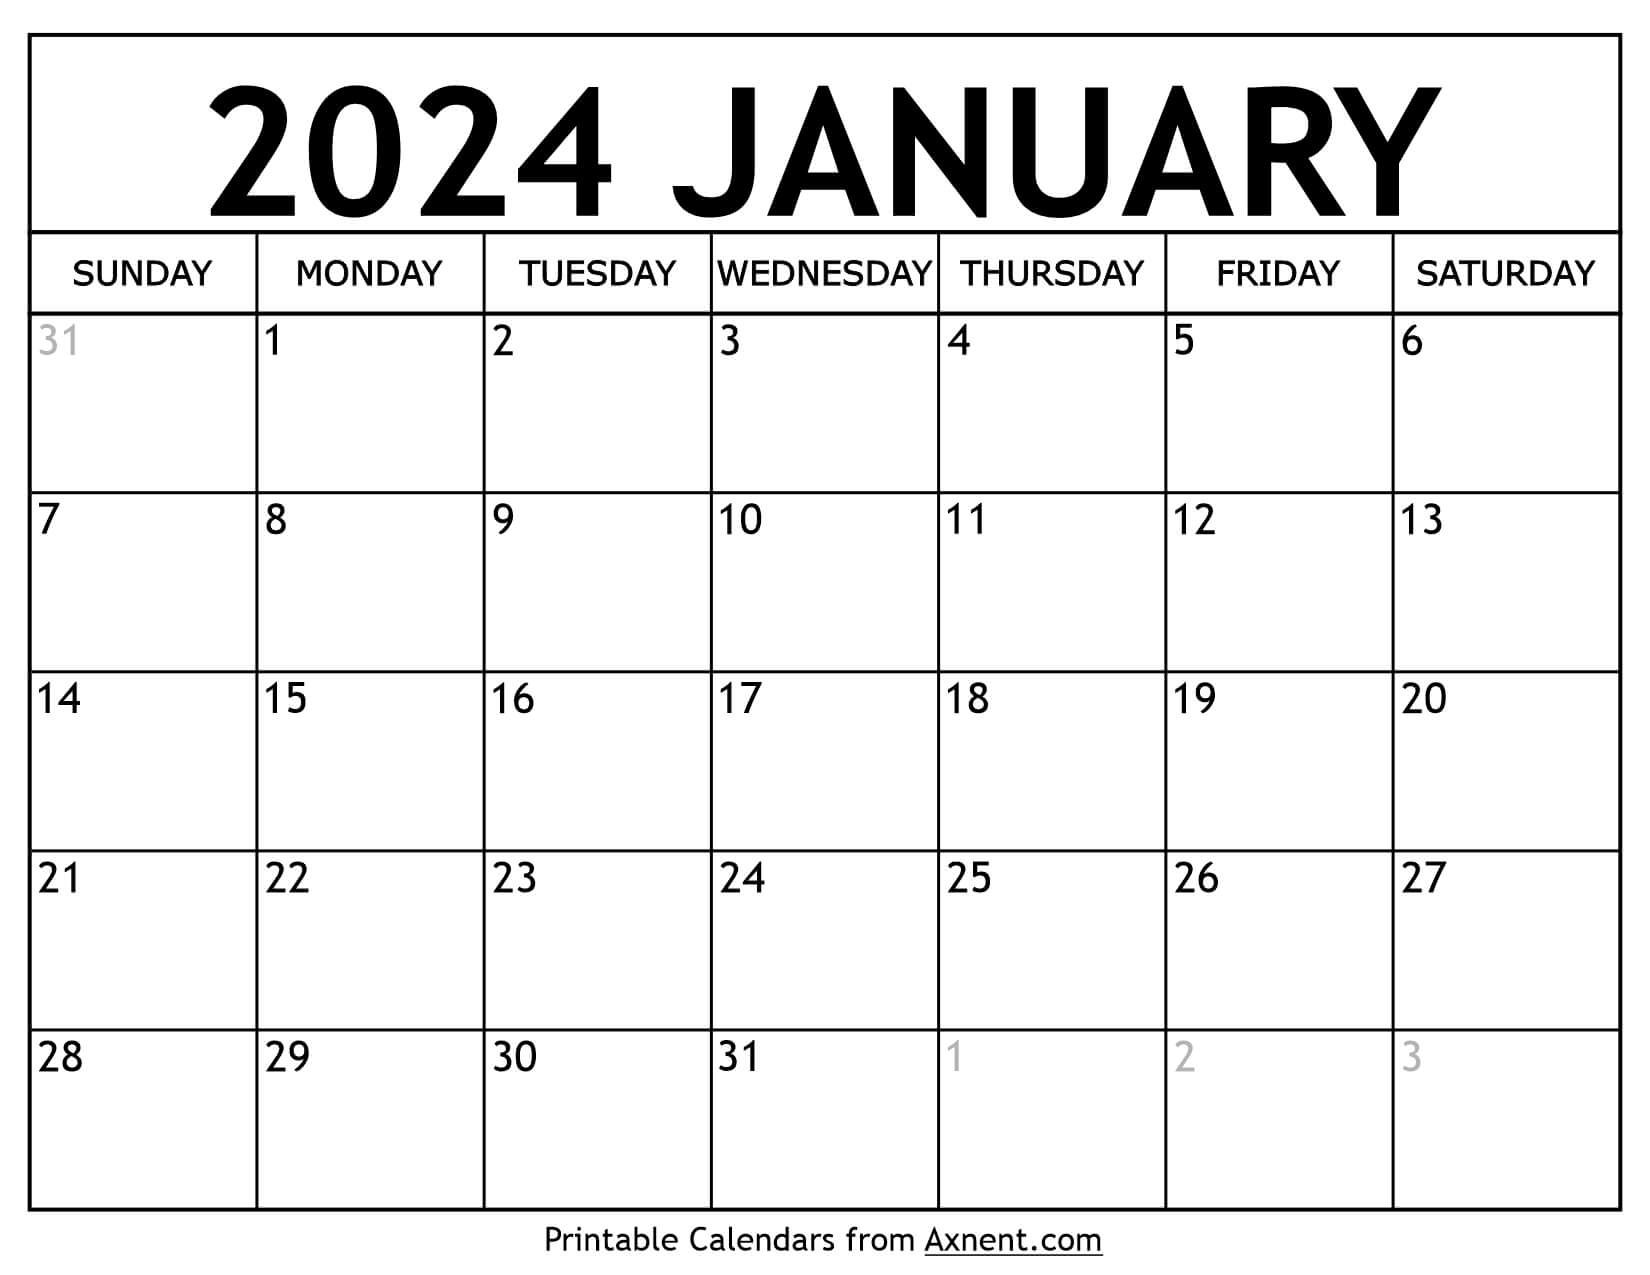 Printable January 2024 Calendar Template - Print Now for January Blank Calendar 2024 Printable